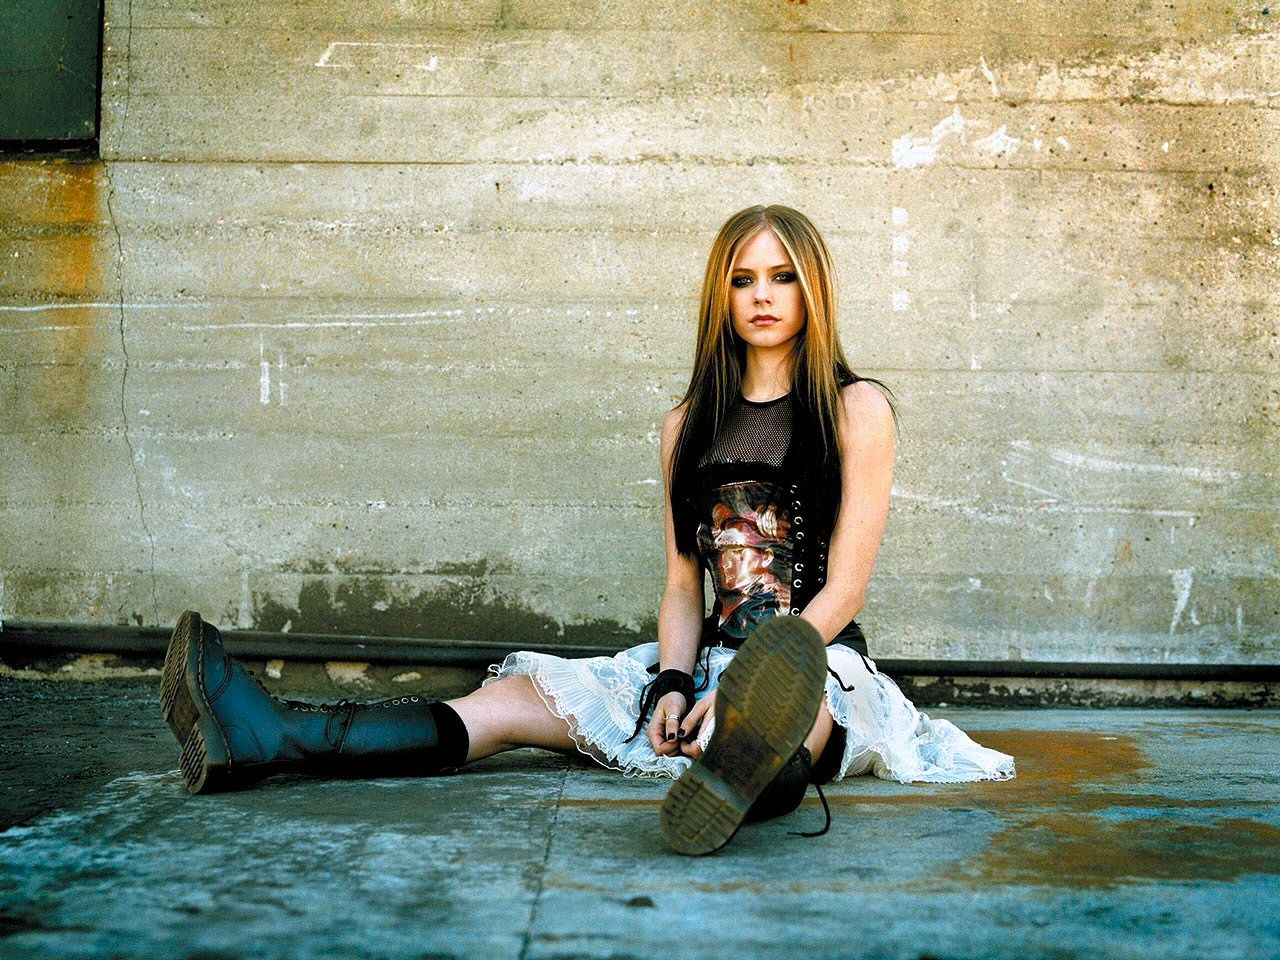 Avril Lavigne desktop PC and Mac wallpaper